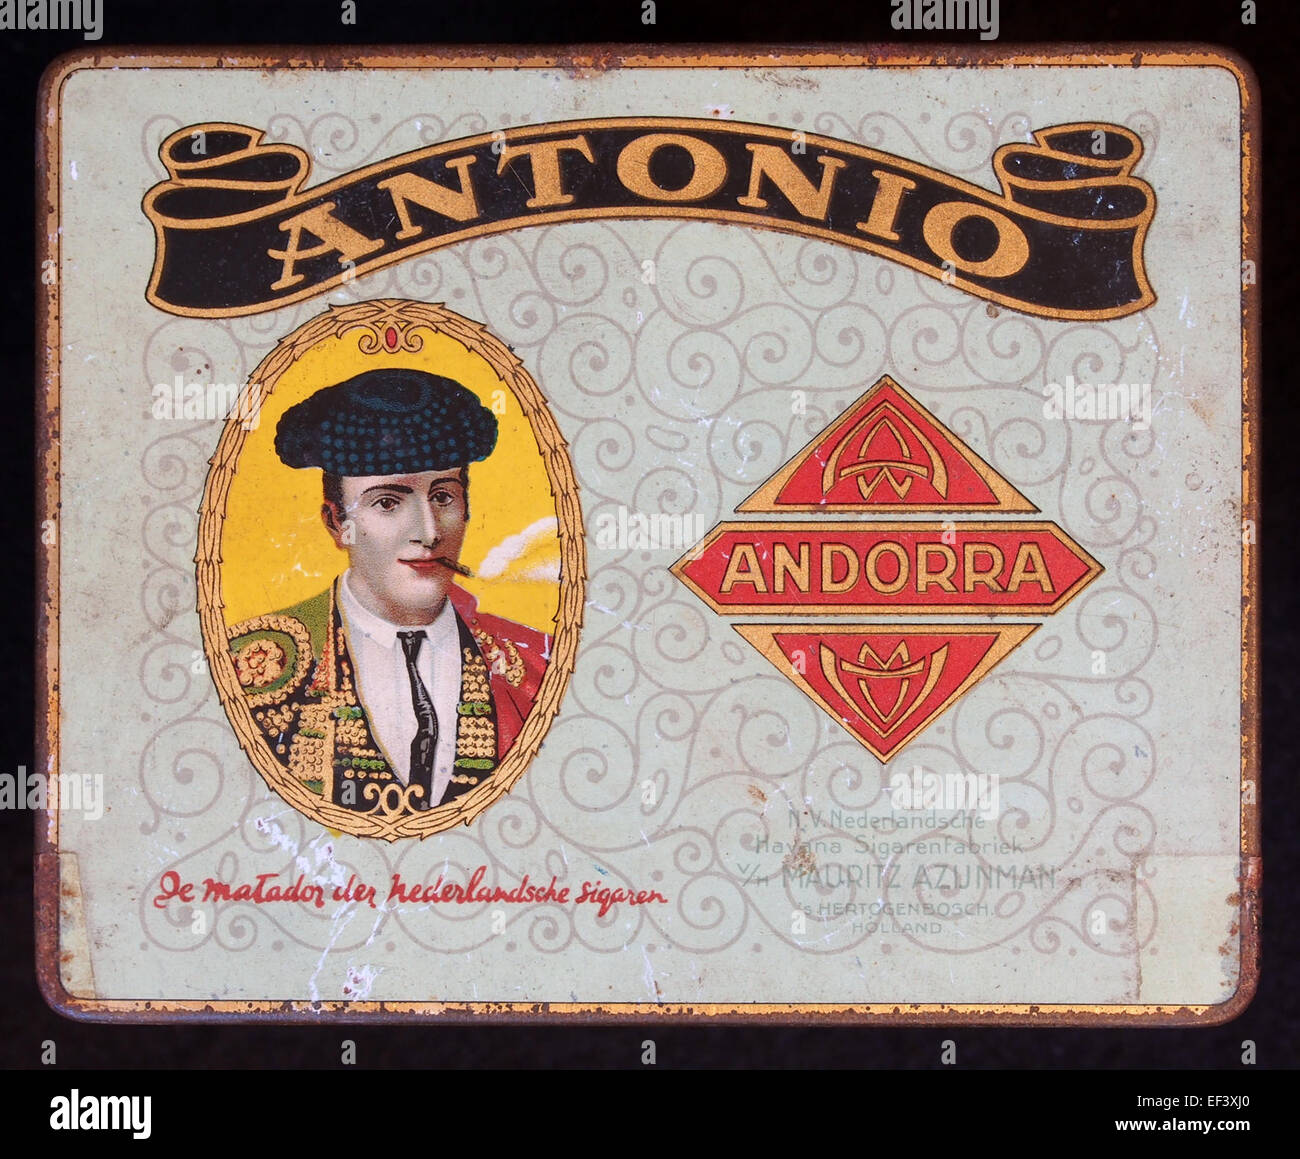 Antonio Andorra sigarenblikje Foto Stock